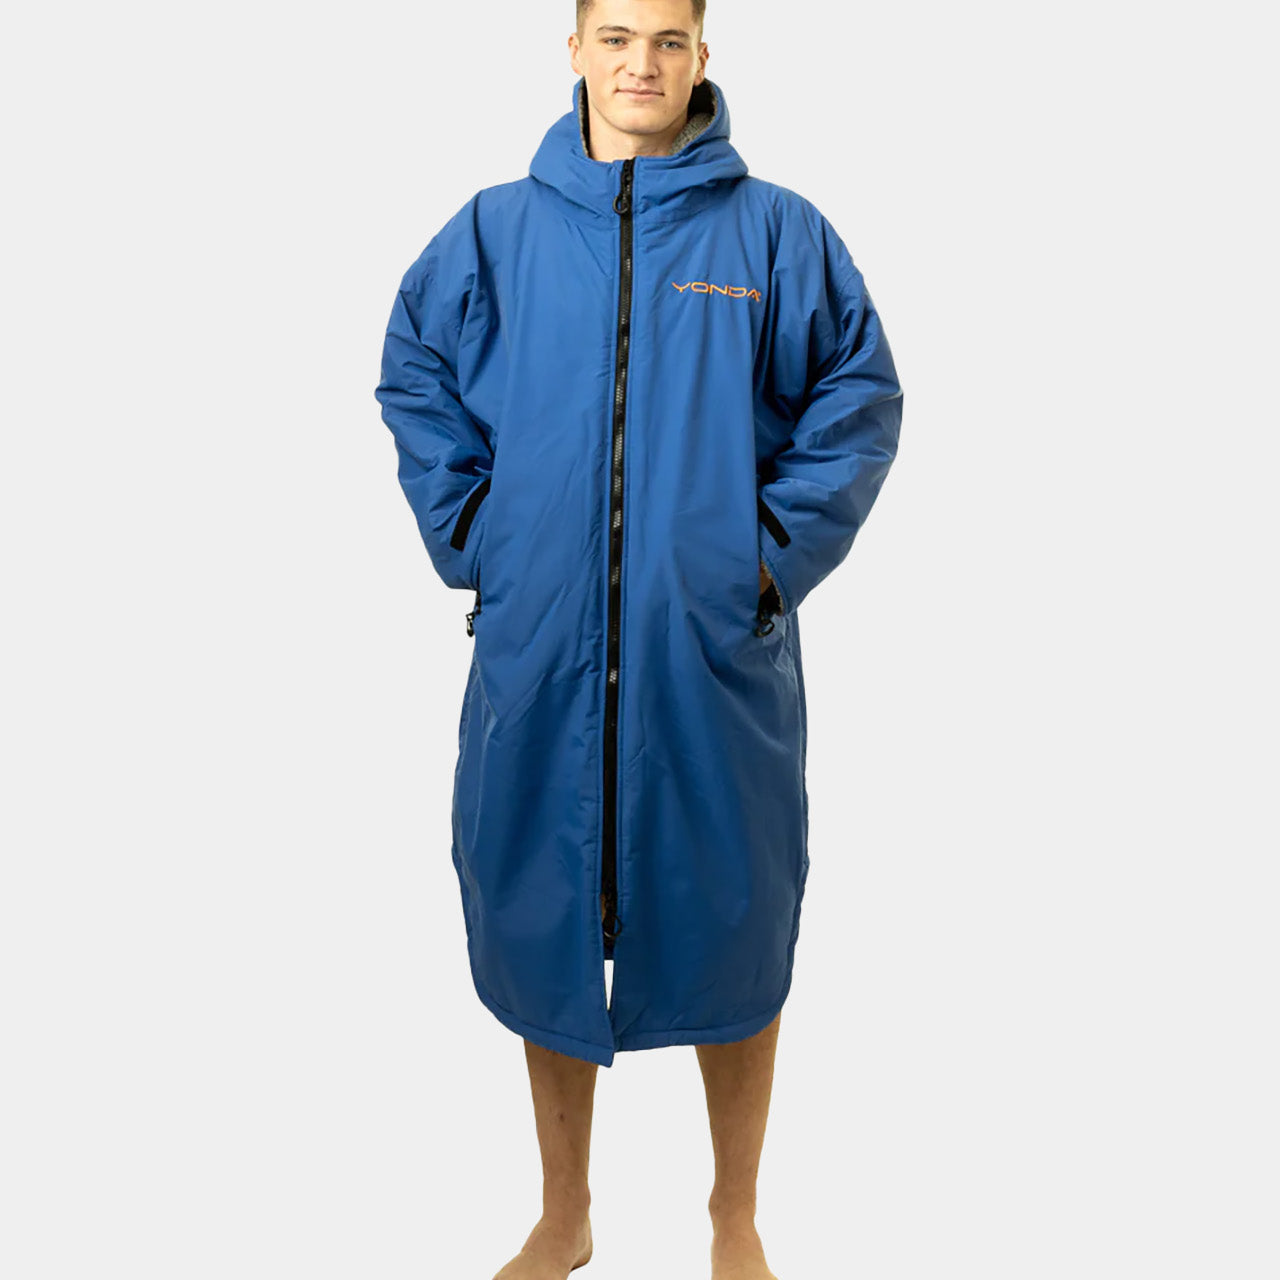 YONDA Waterproof Long Sleeve Changing Robe